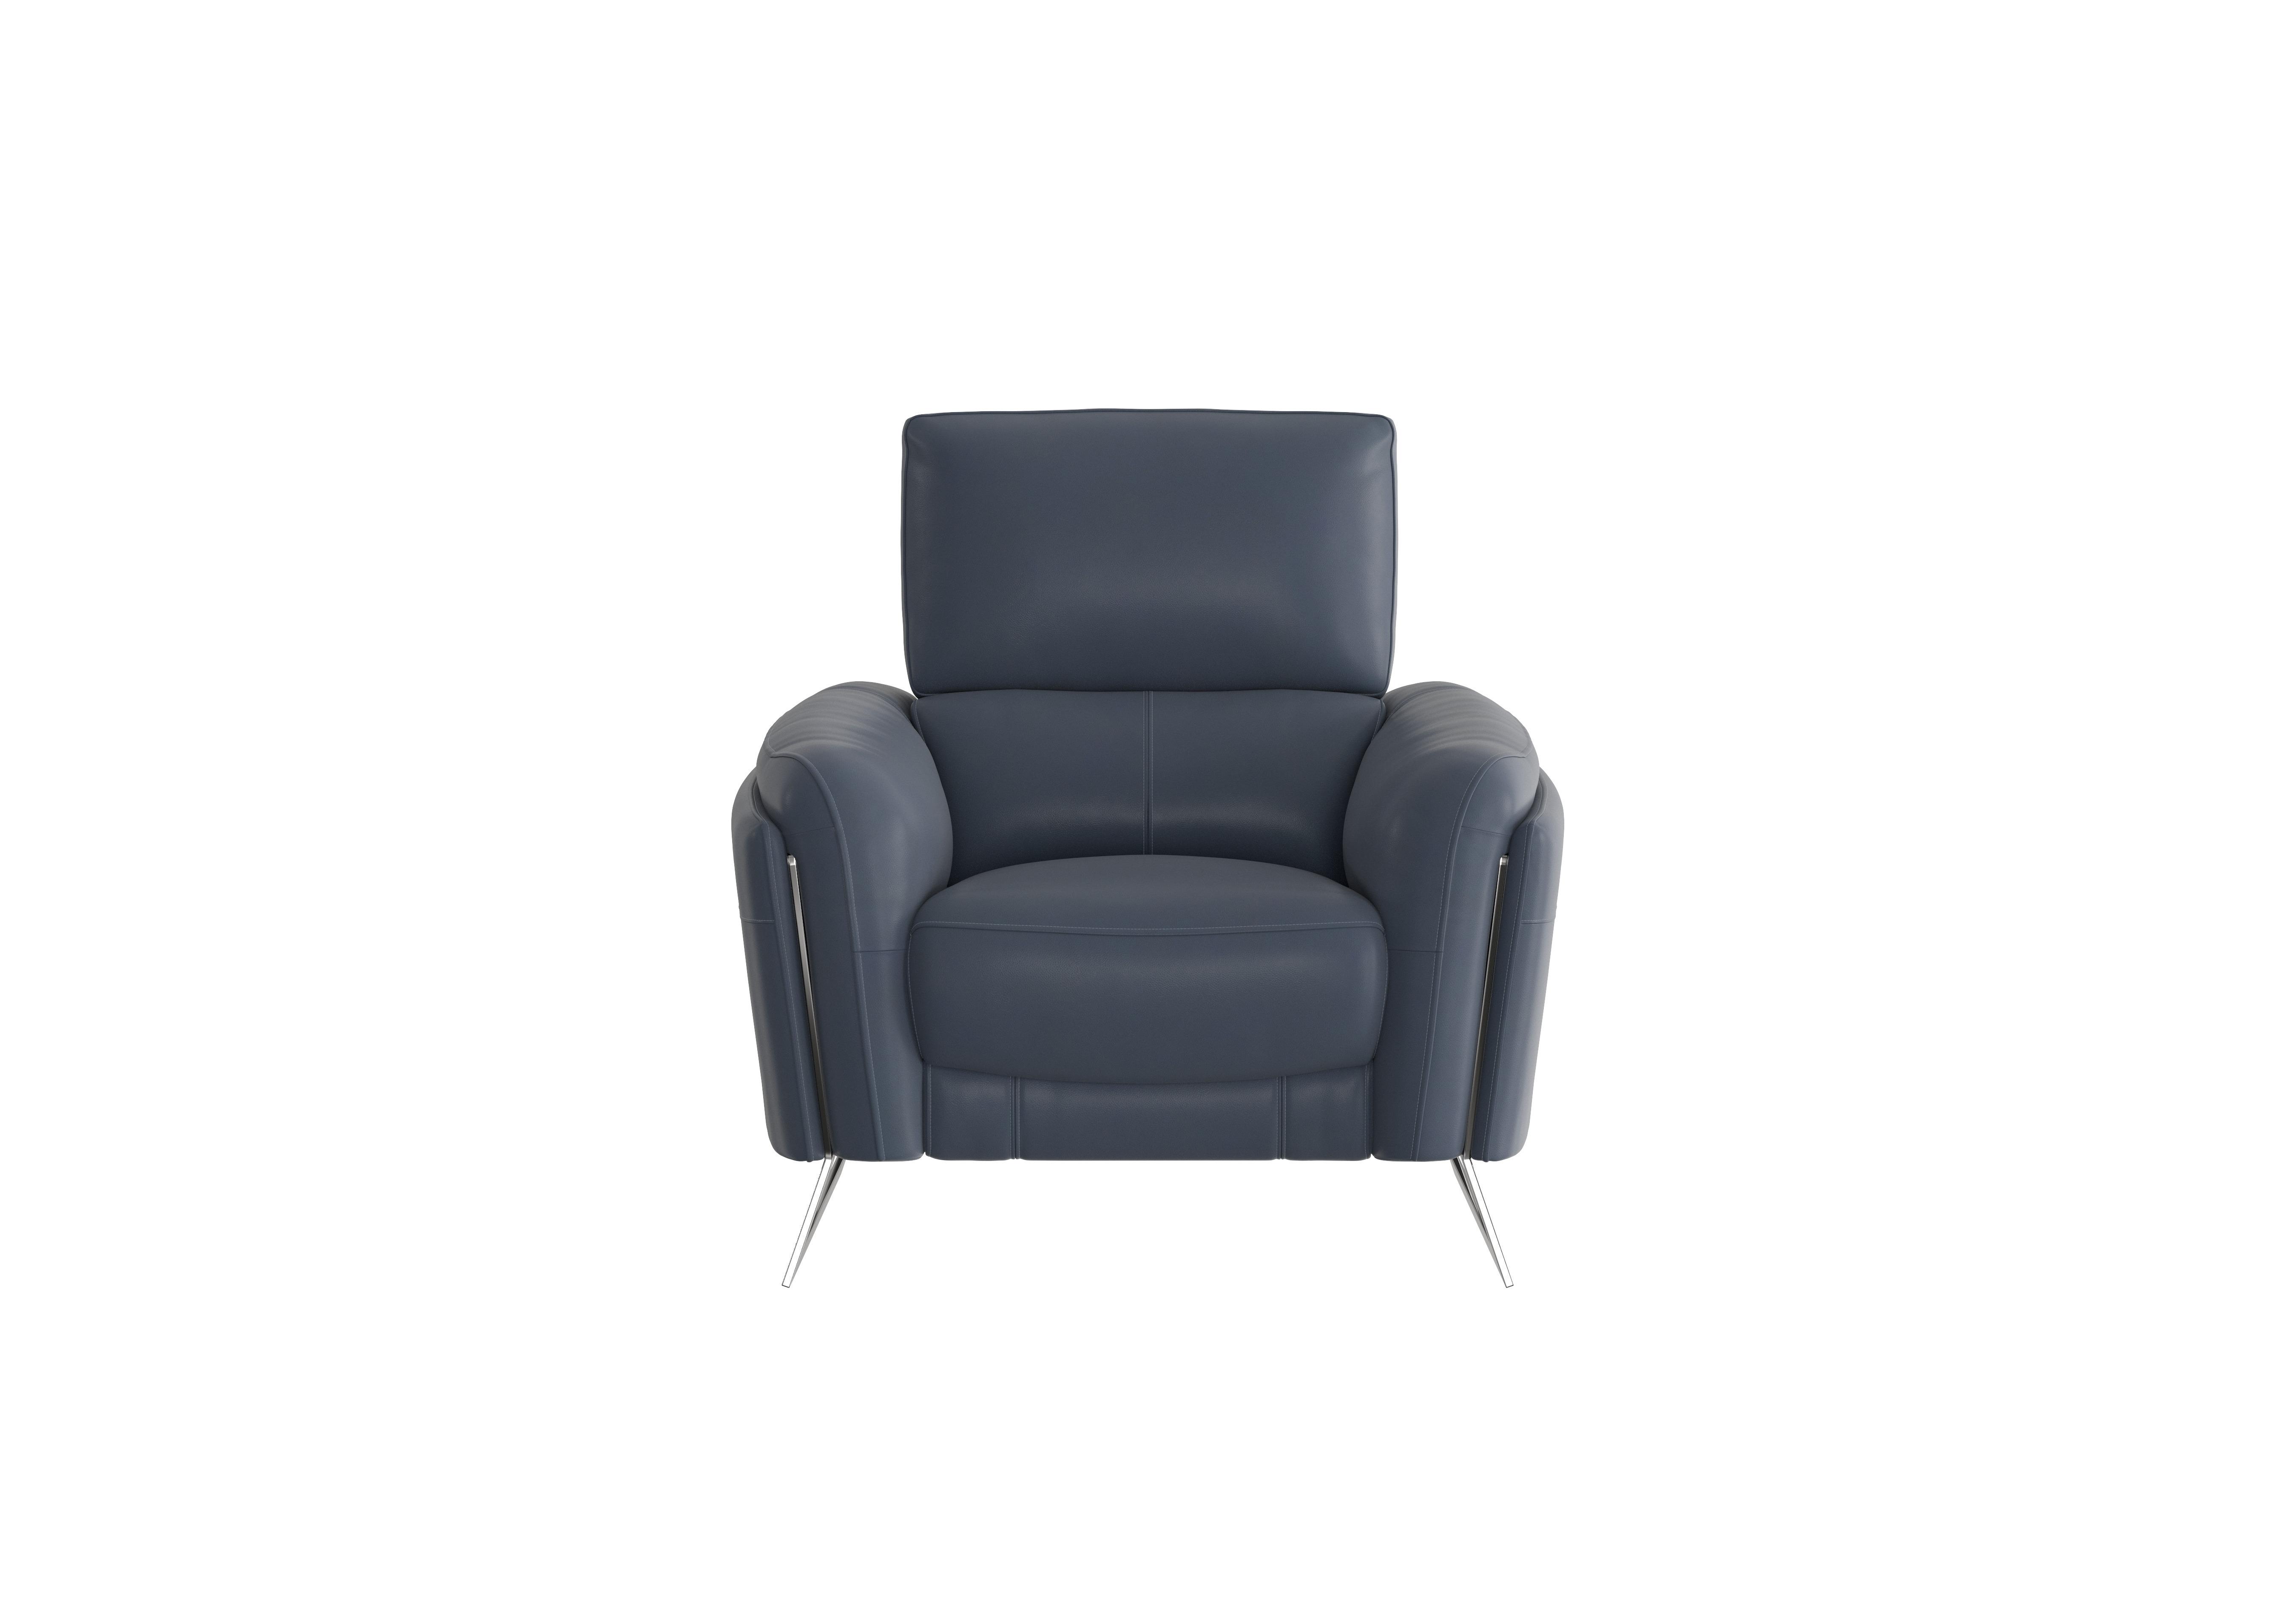 Amarilla Leather Armchair in Bv-313e Ocean Blue on Furniture Village